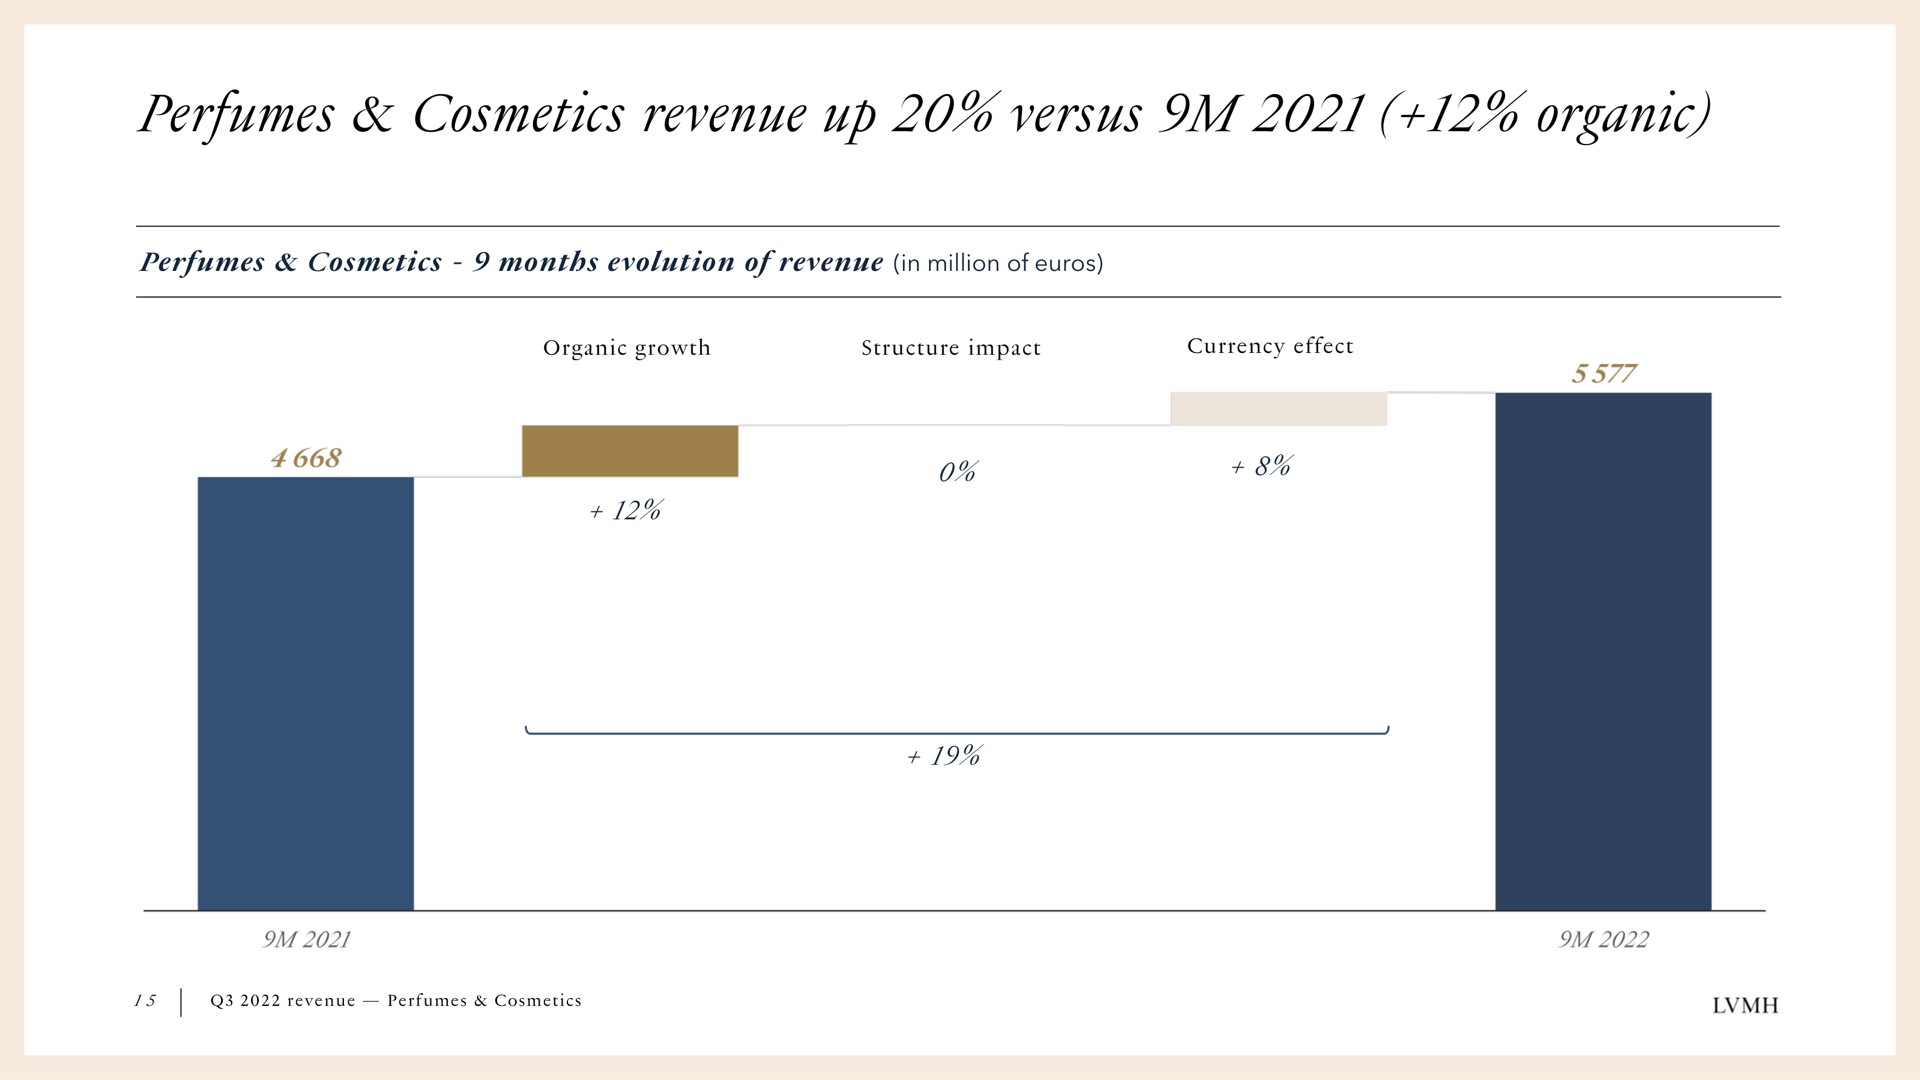 perfumes cosmetics revenue up versus organic | LVMH